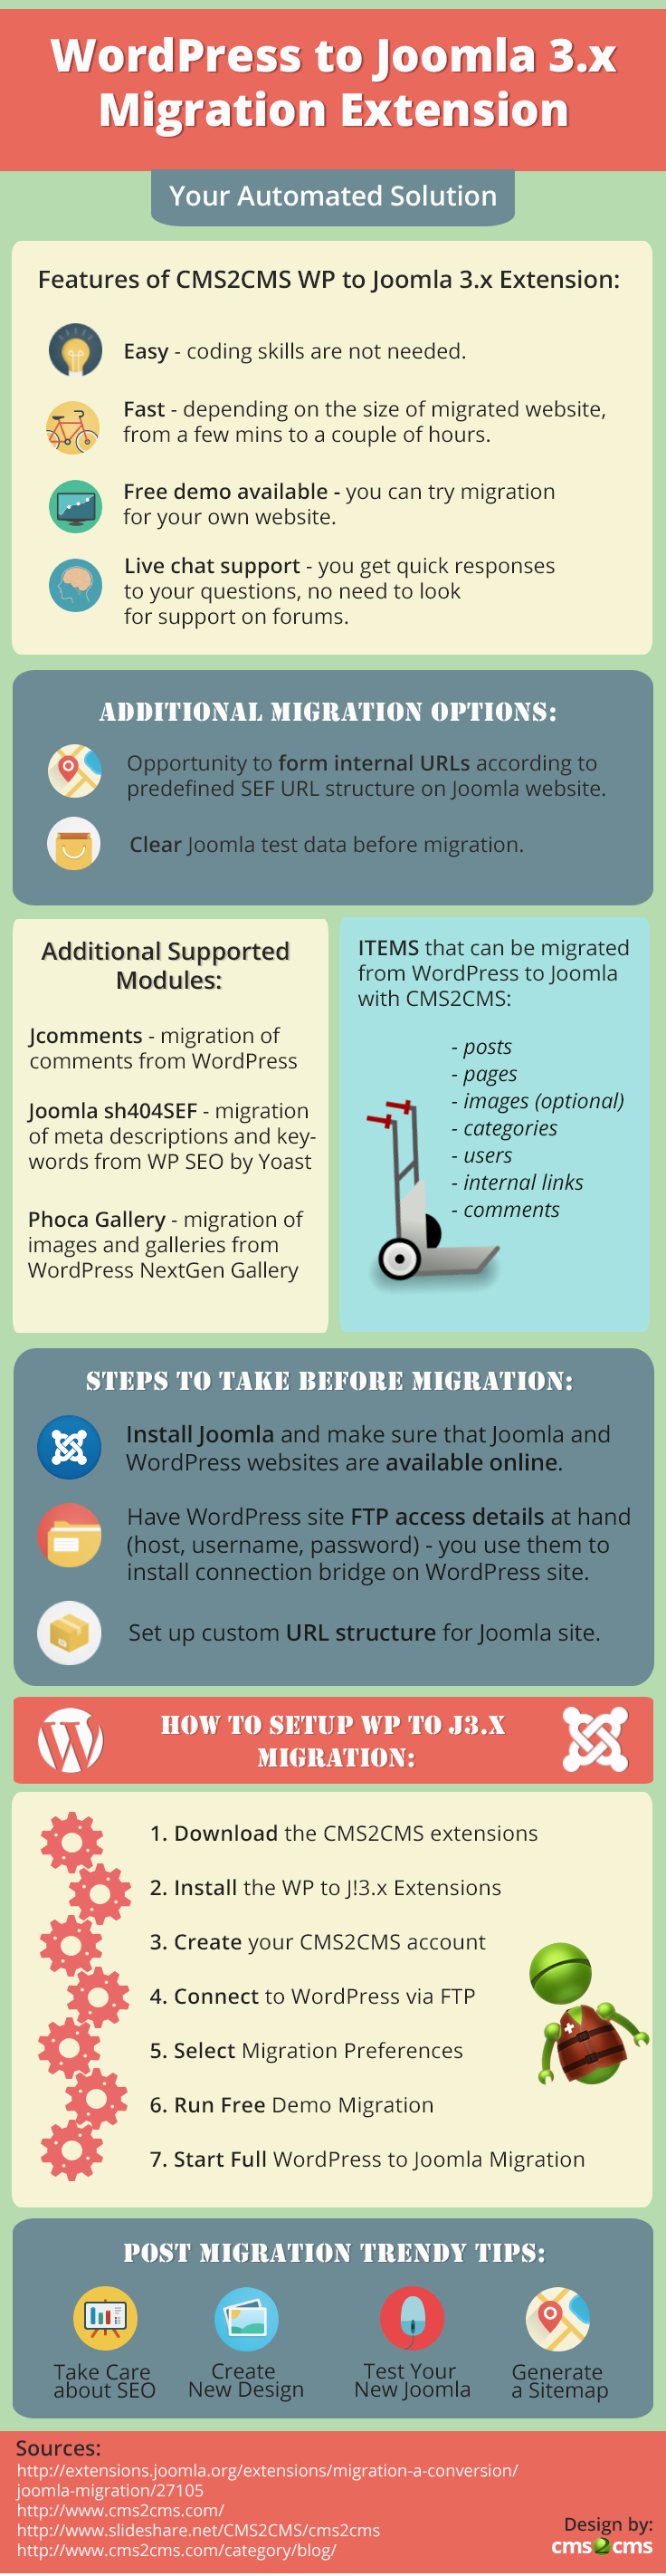 cms2cms-wordpress-to-joomla-extension-how-it-works_